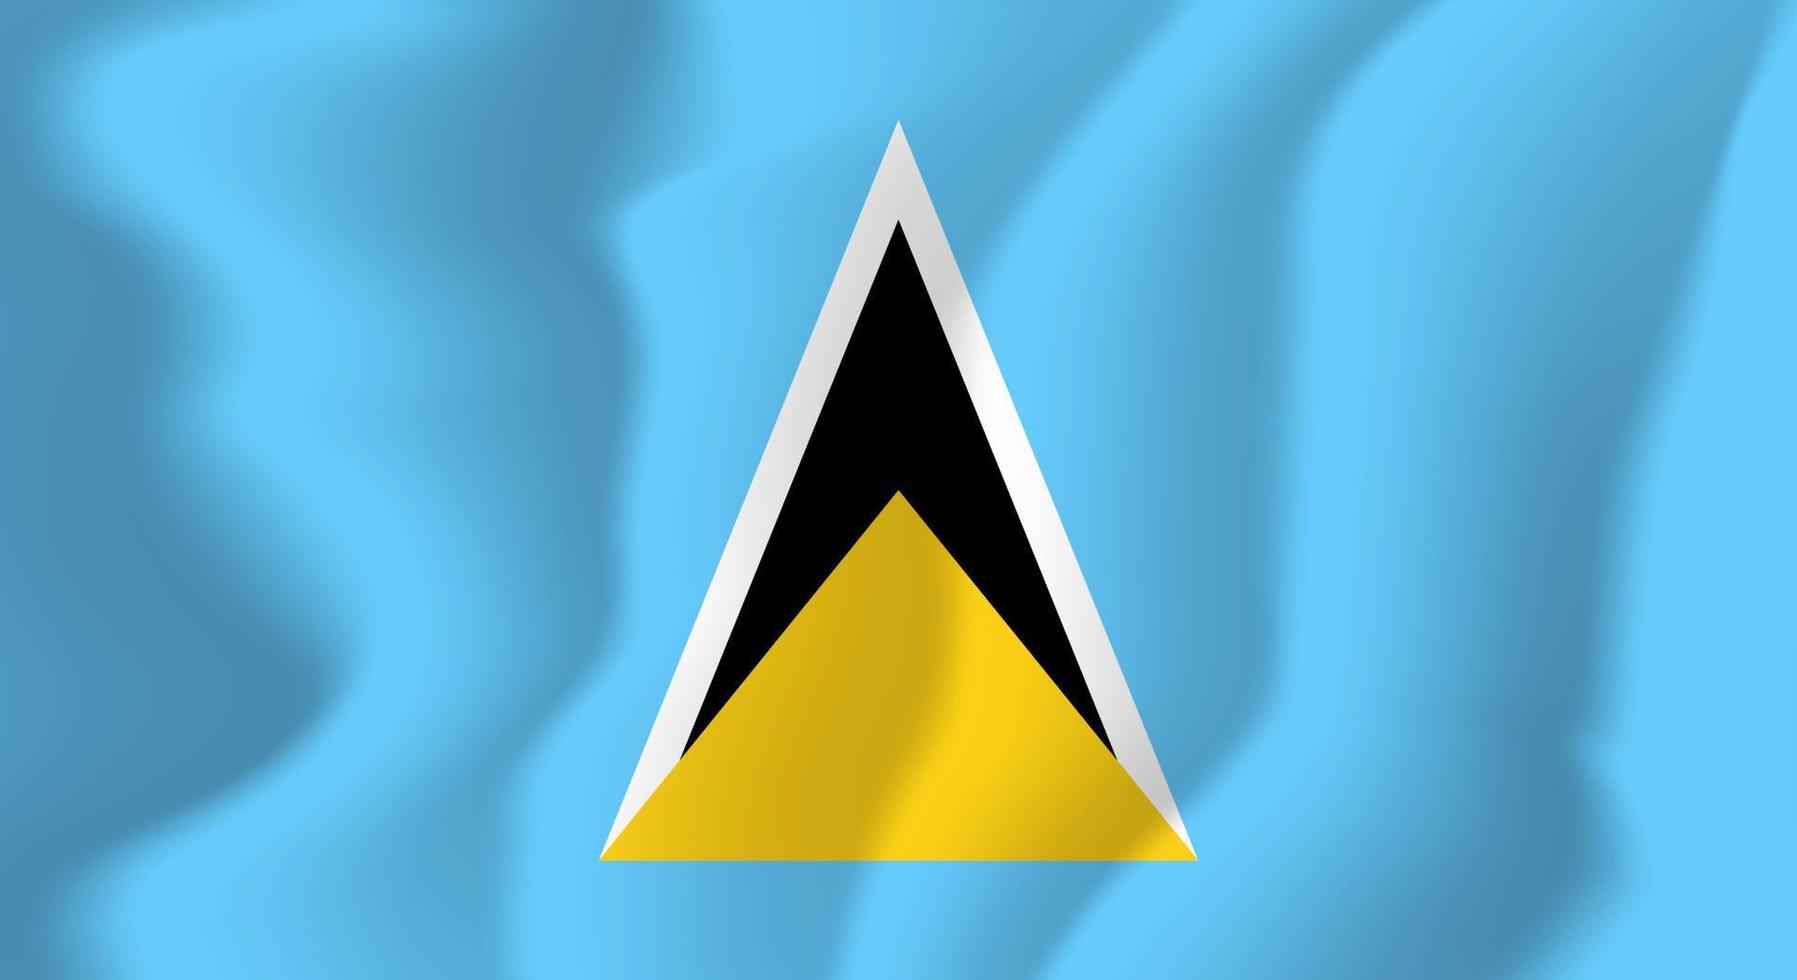 heilige lucia nationale wapperende vlag achtergrond afbeelding vector